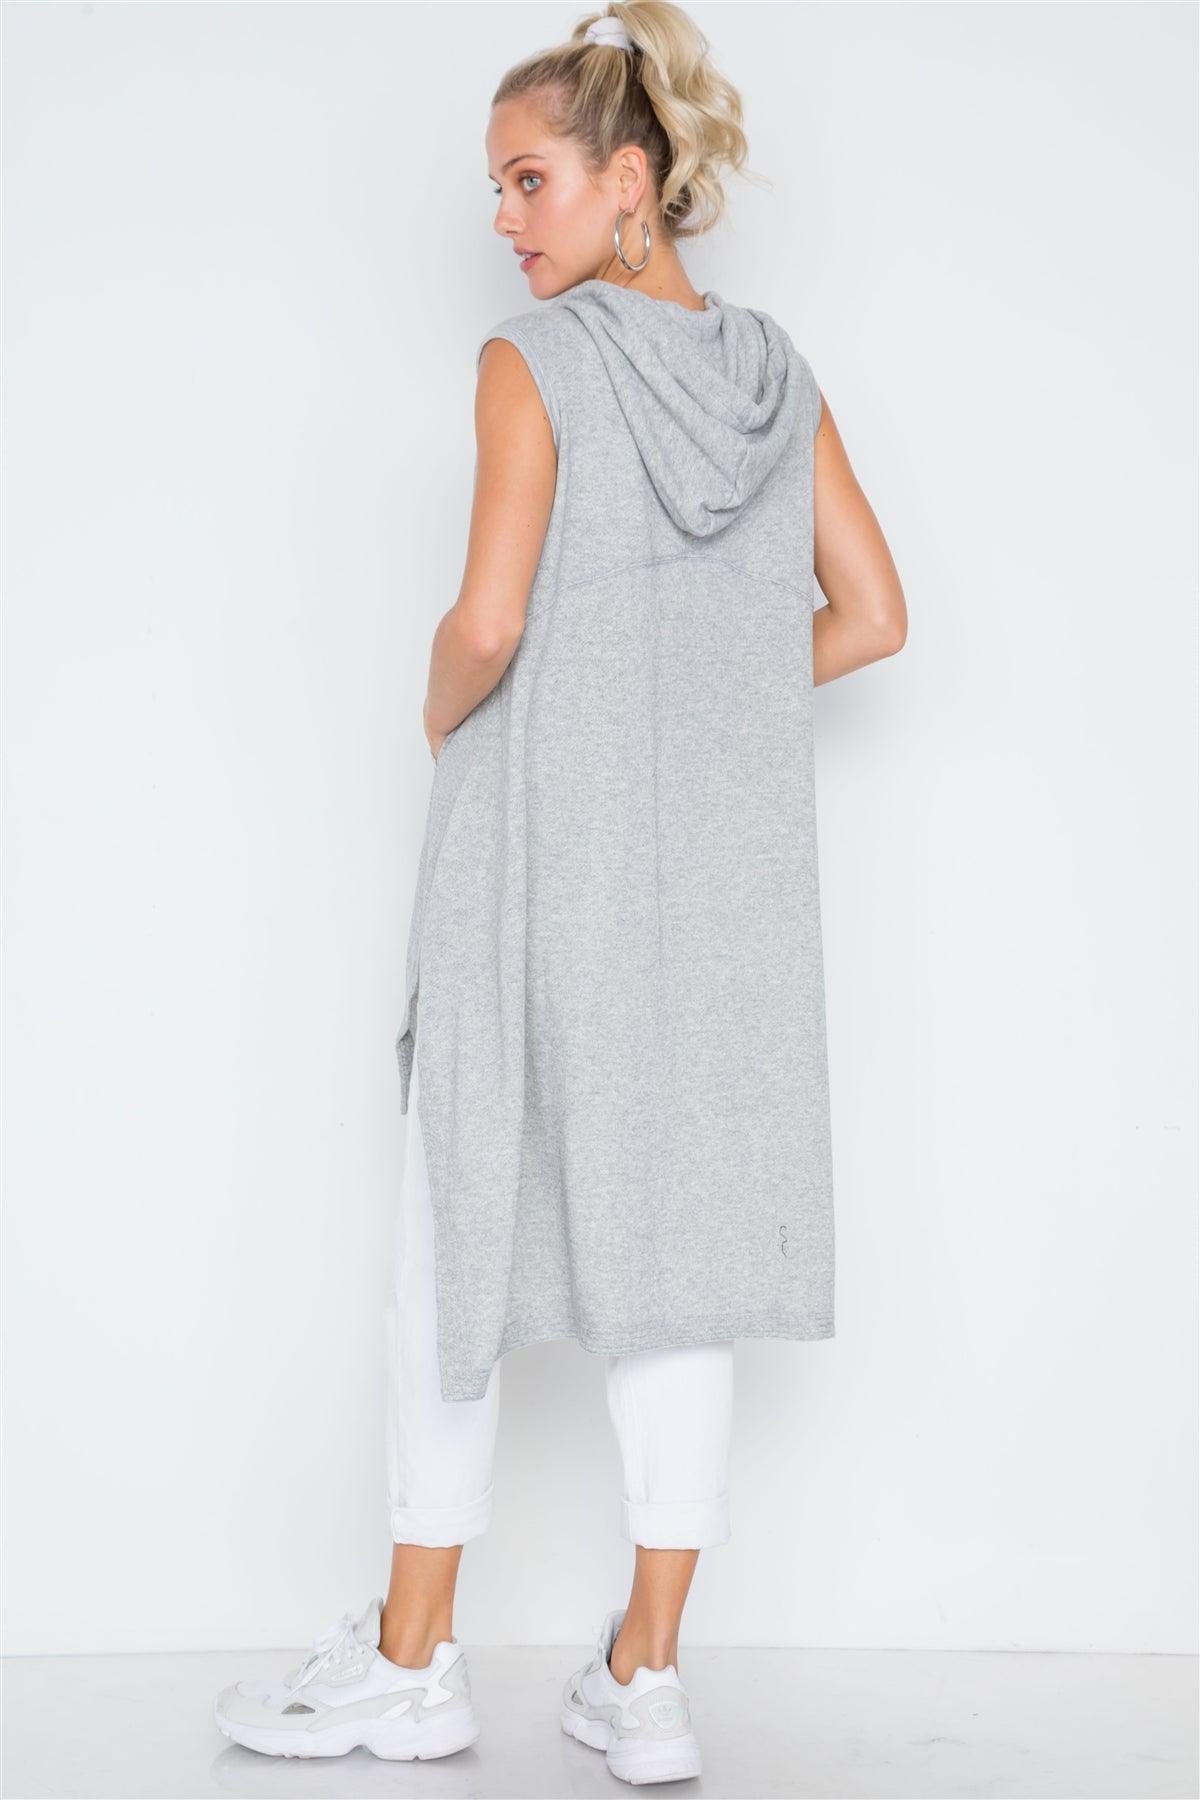 Heather Grey Sleeveless Zip-Up Hooded Knit Vest /3-2-1